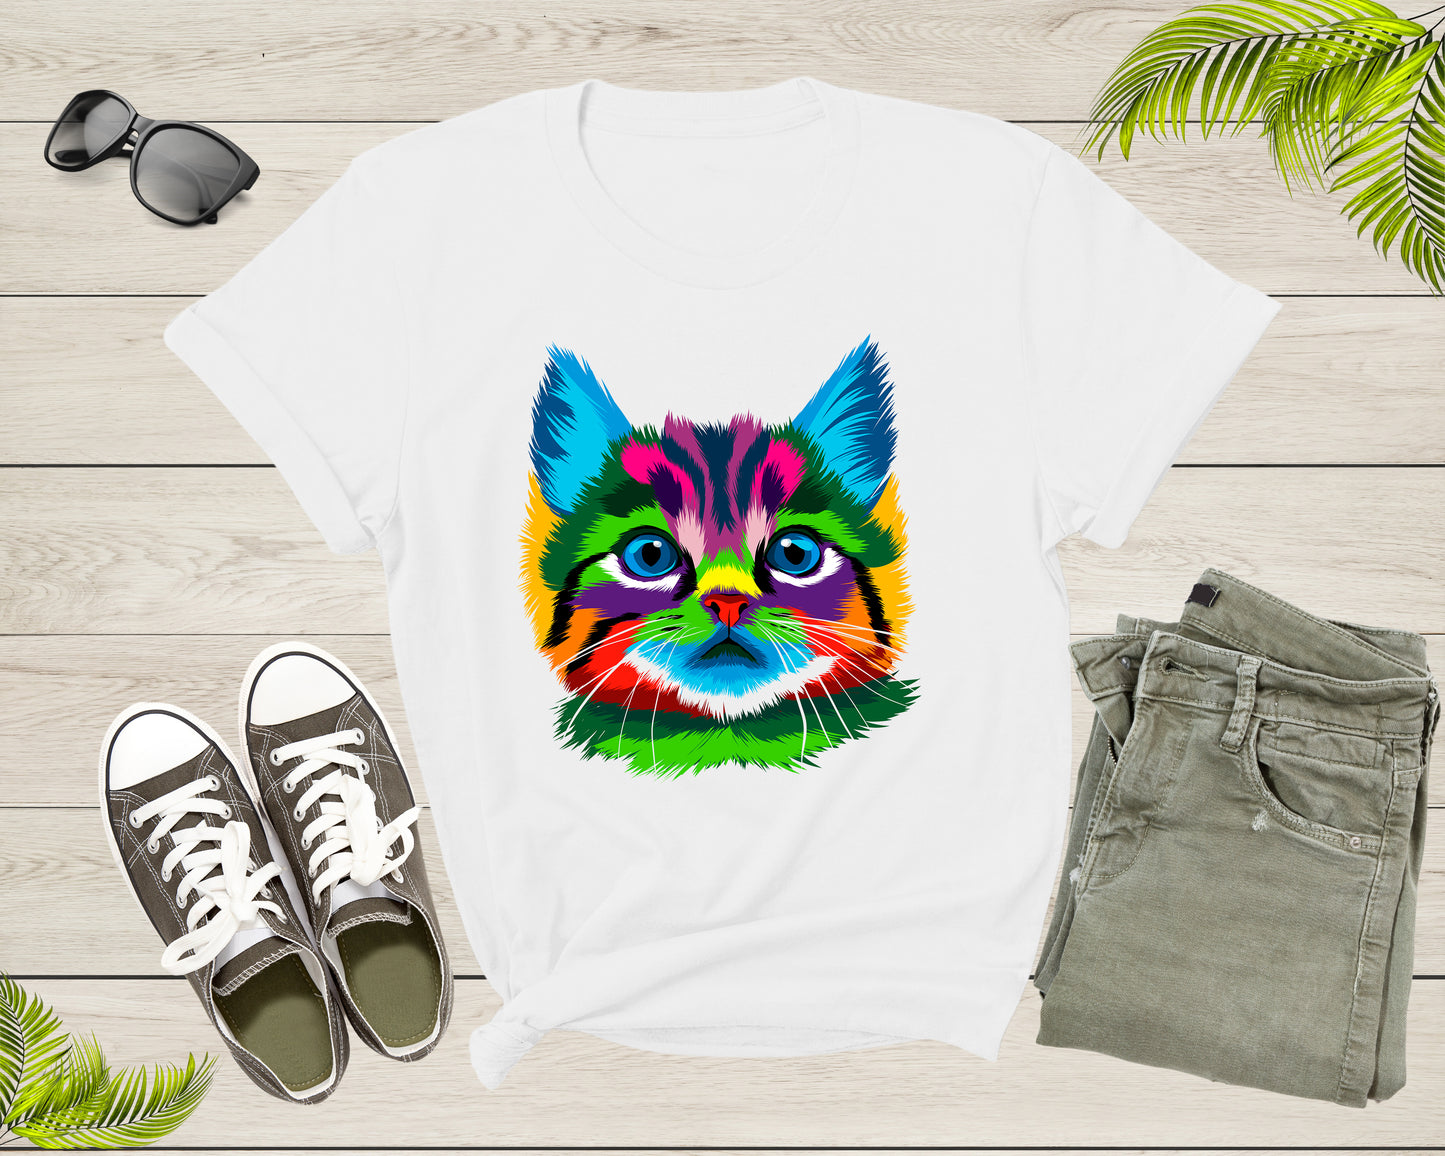 Cute Cool Colorful Cat Face Kitten Kitty Pet Cuddly Cat T-Shirt Cat Lover Gift T Shirt for Men Women Kids Boys Girls Kitten Graphic TShirt